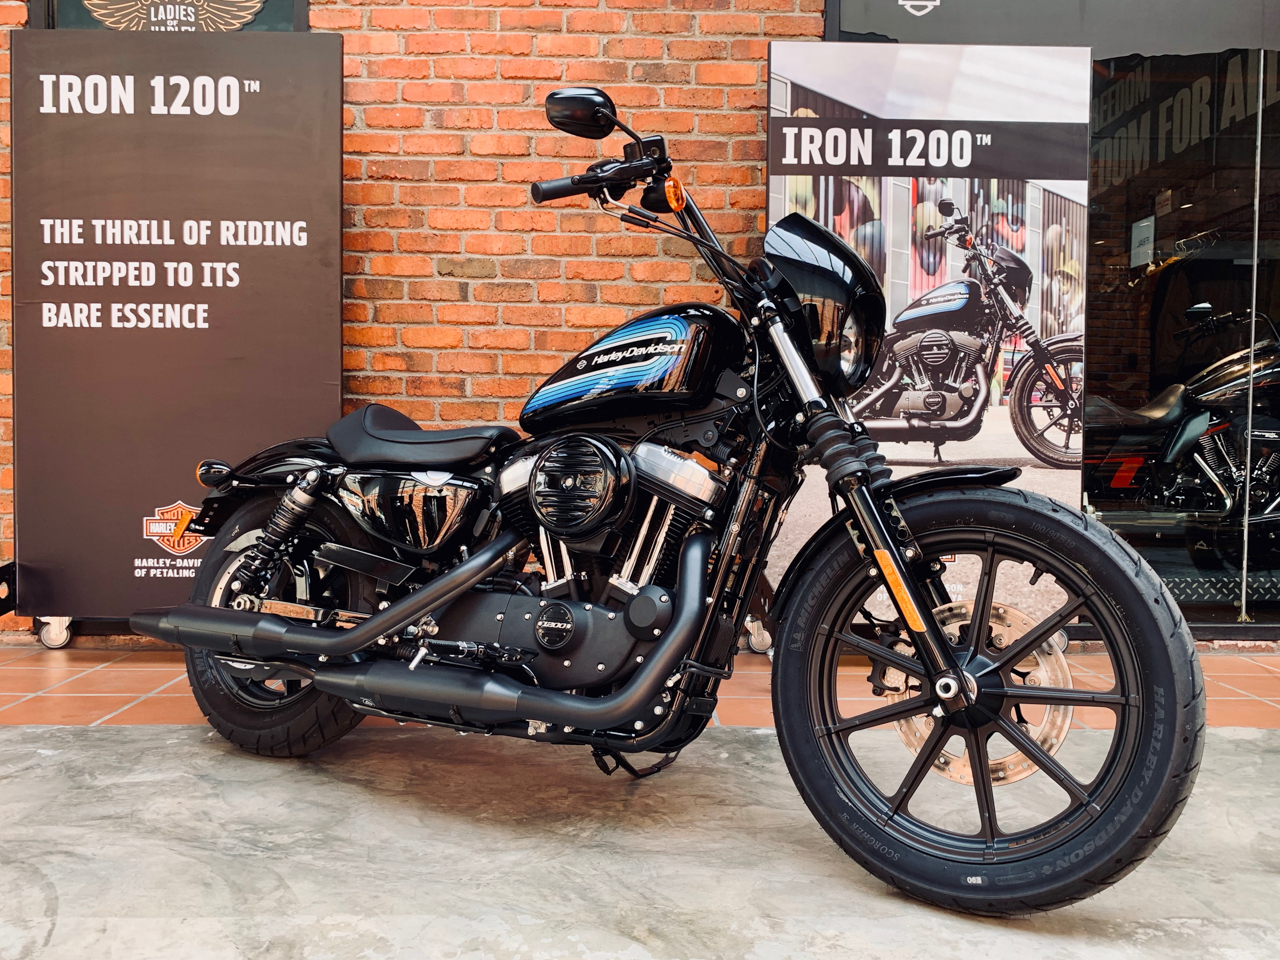 2019 Harley Davidson Sportster 1200 Iron Ready To Rumble In Malaysia Bikesrepublic